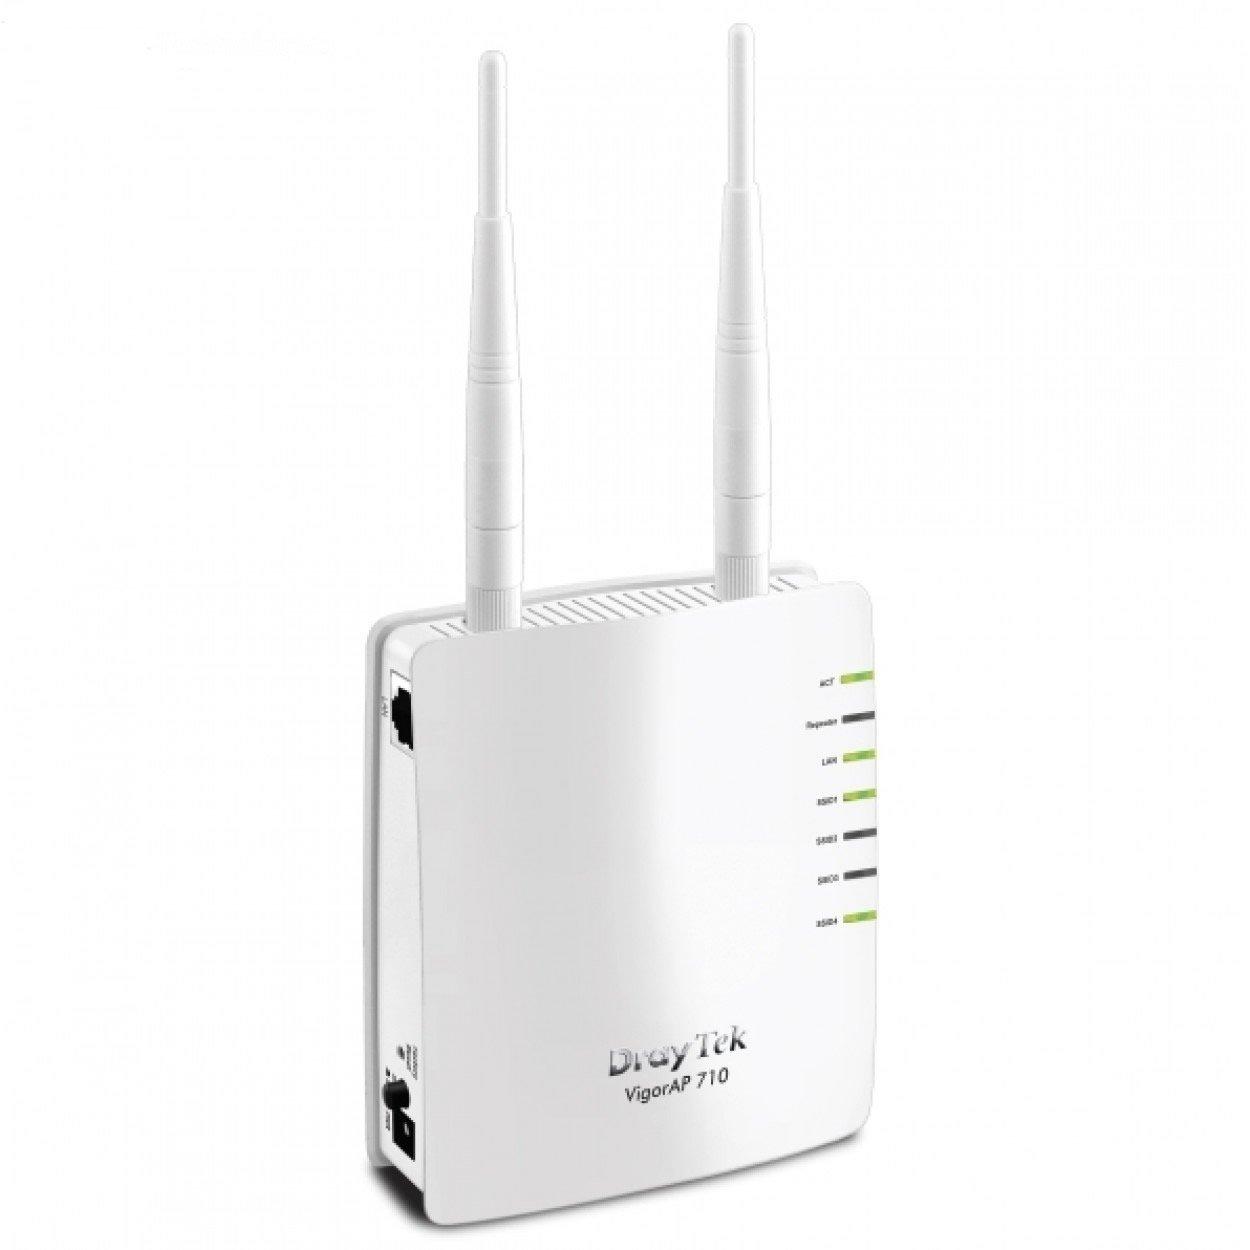 DrayTek AP 710 Wifi Access Point